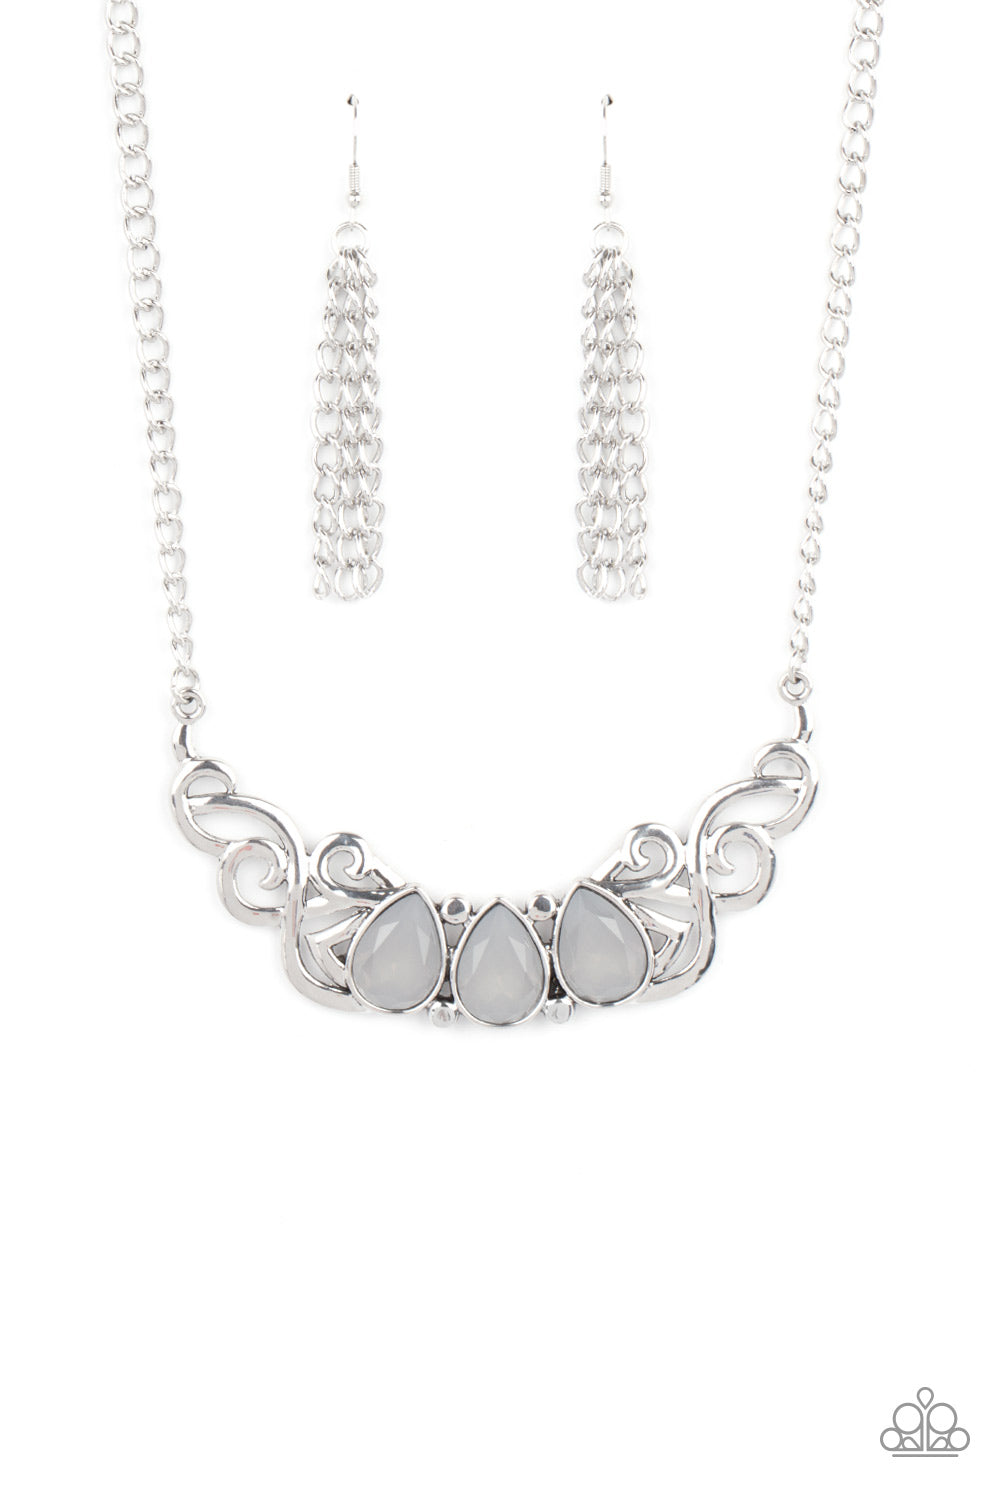 PRE-ORDER - Paparazzi Heavenly Happenstance - Silver - Necklace & Earrings - $5 Jewelry with Ashley Swint